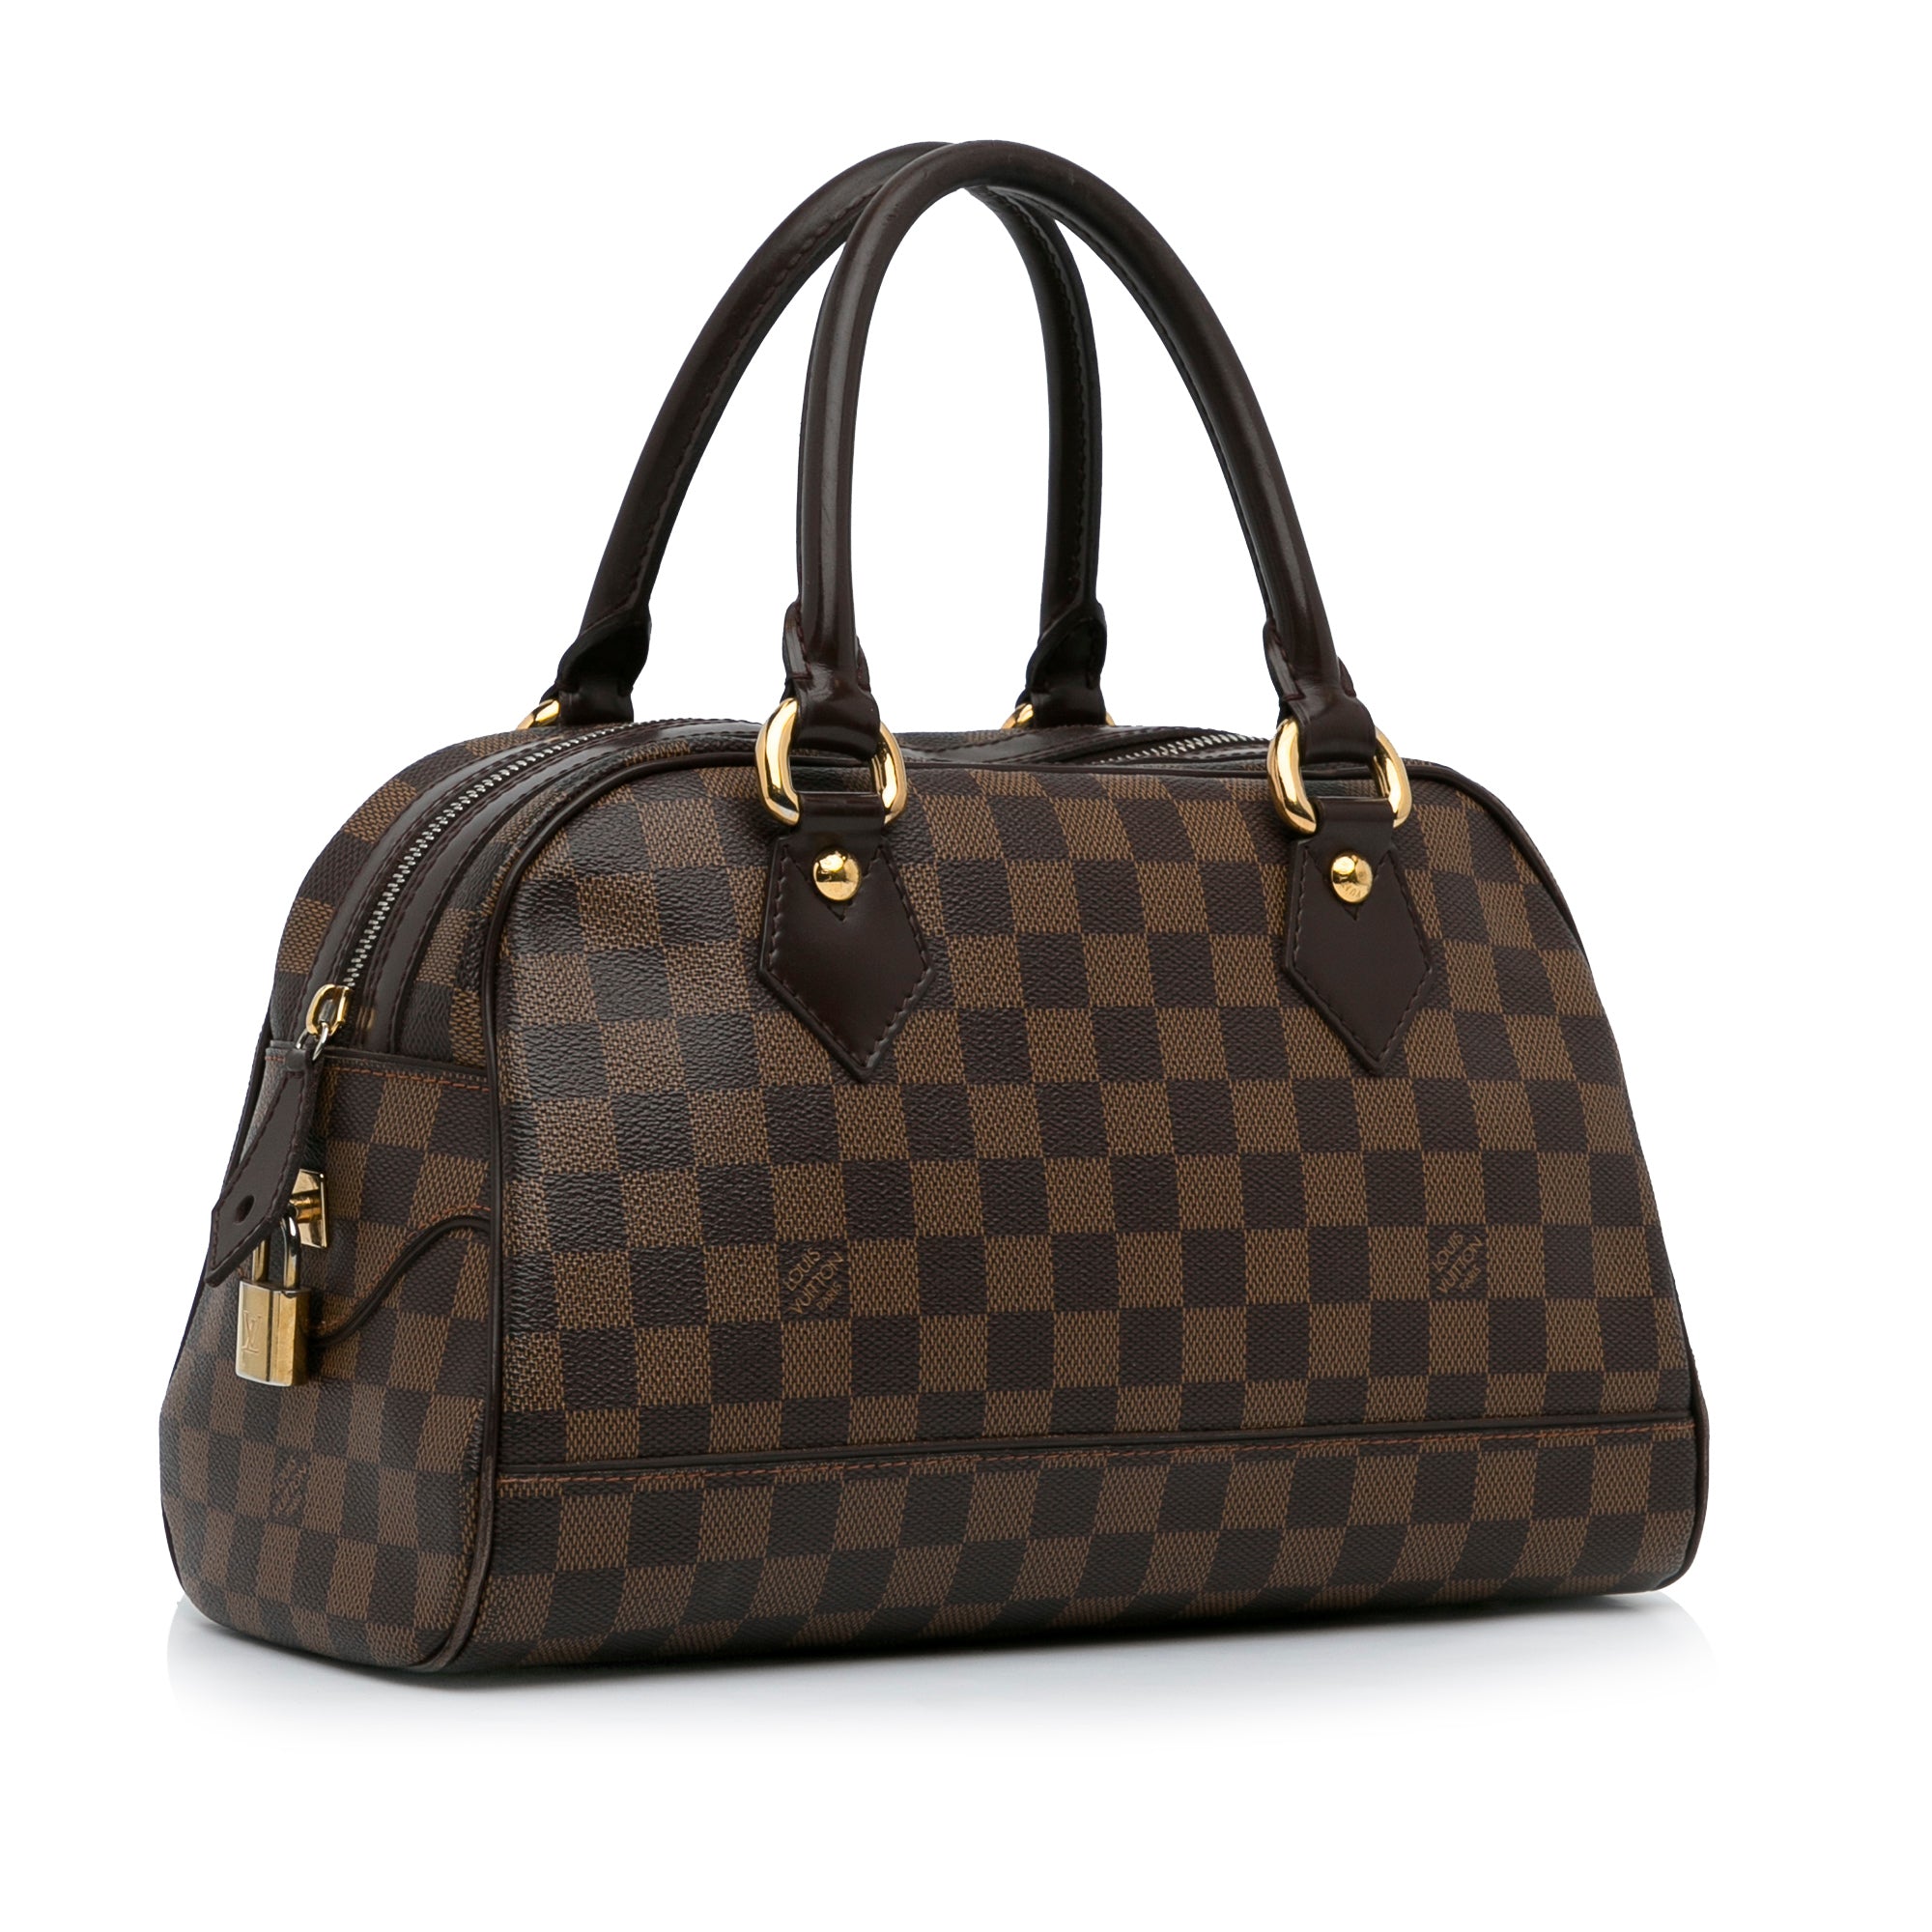 Louis Vuitton - Authenticated Handbag - Leather Brown Plain for Women, Good Condition